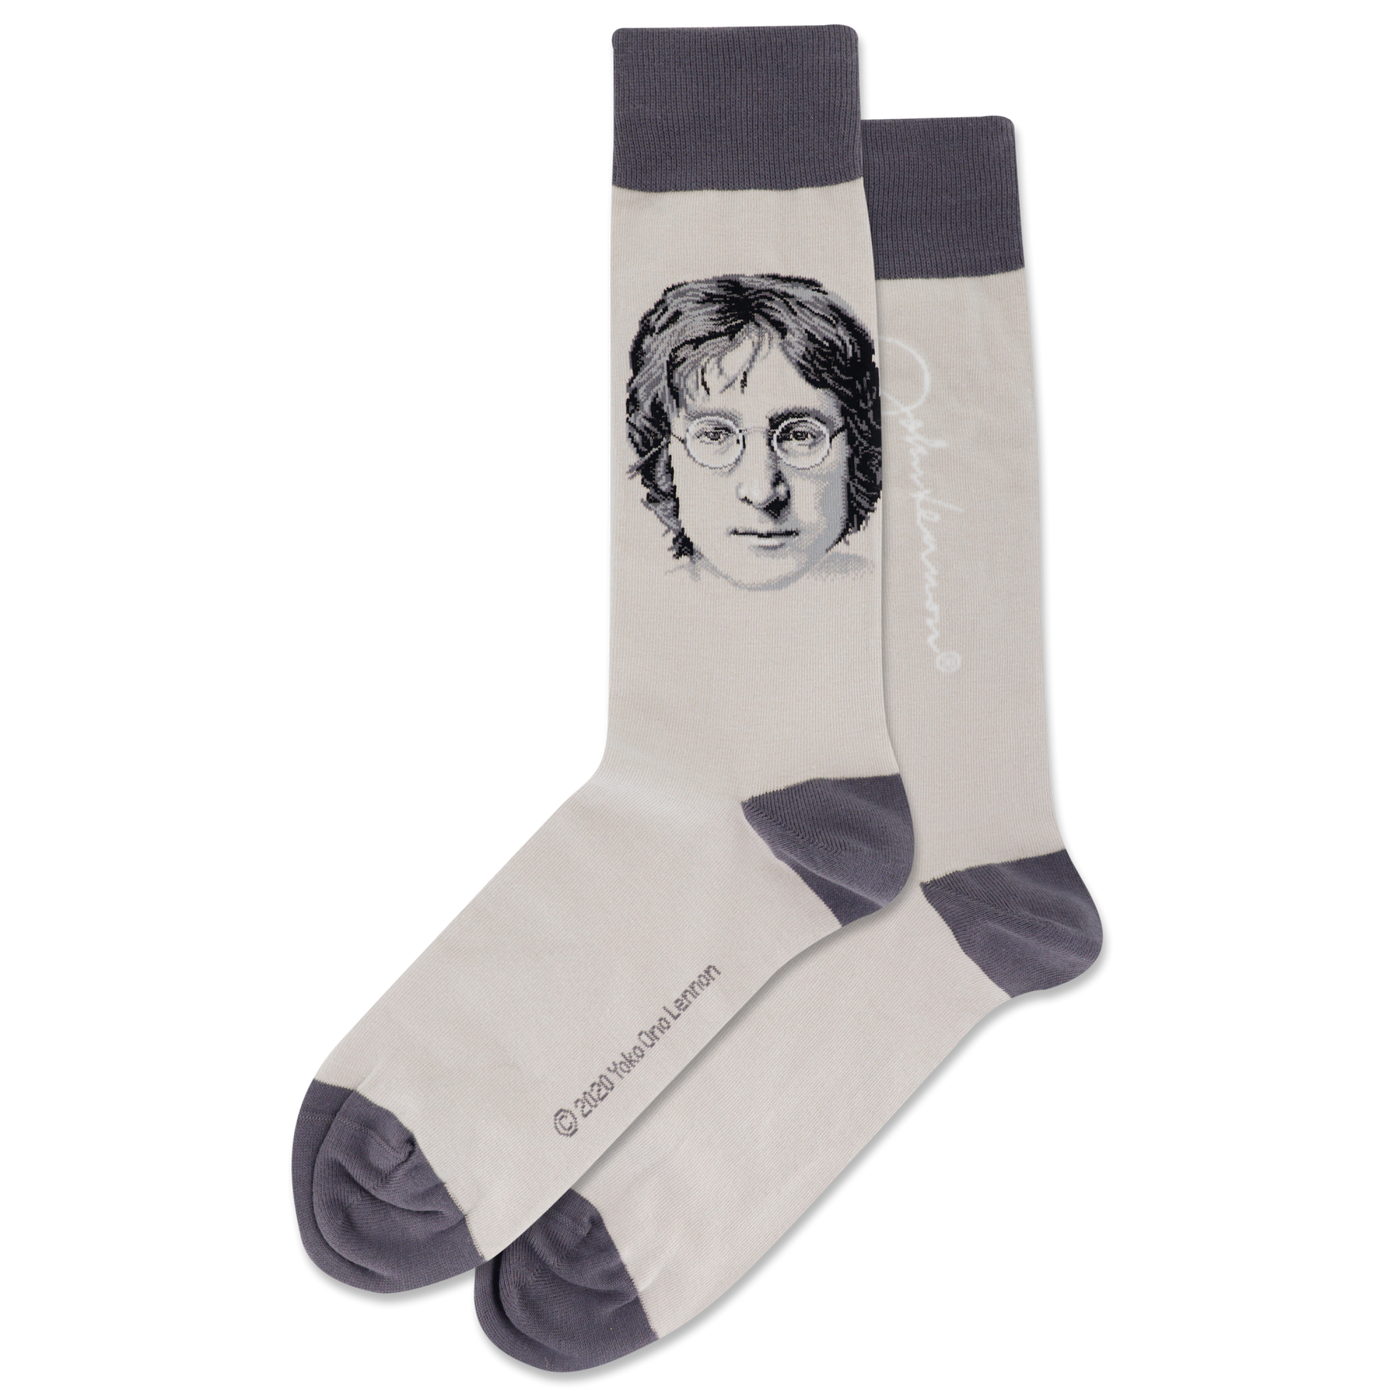 "John Lennon Portrait" Cotton Crew Socks by Hot Sox